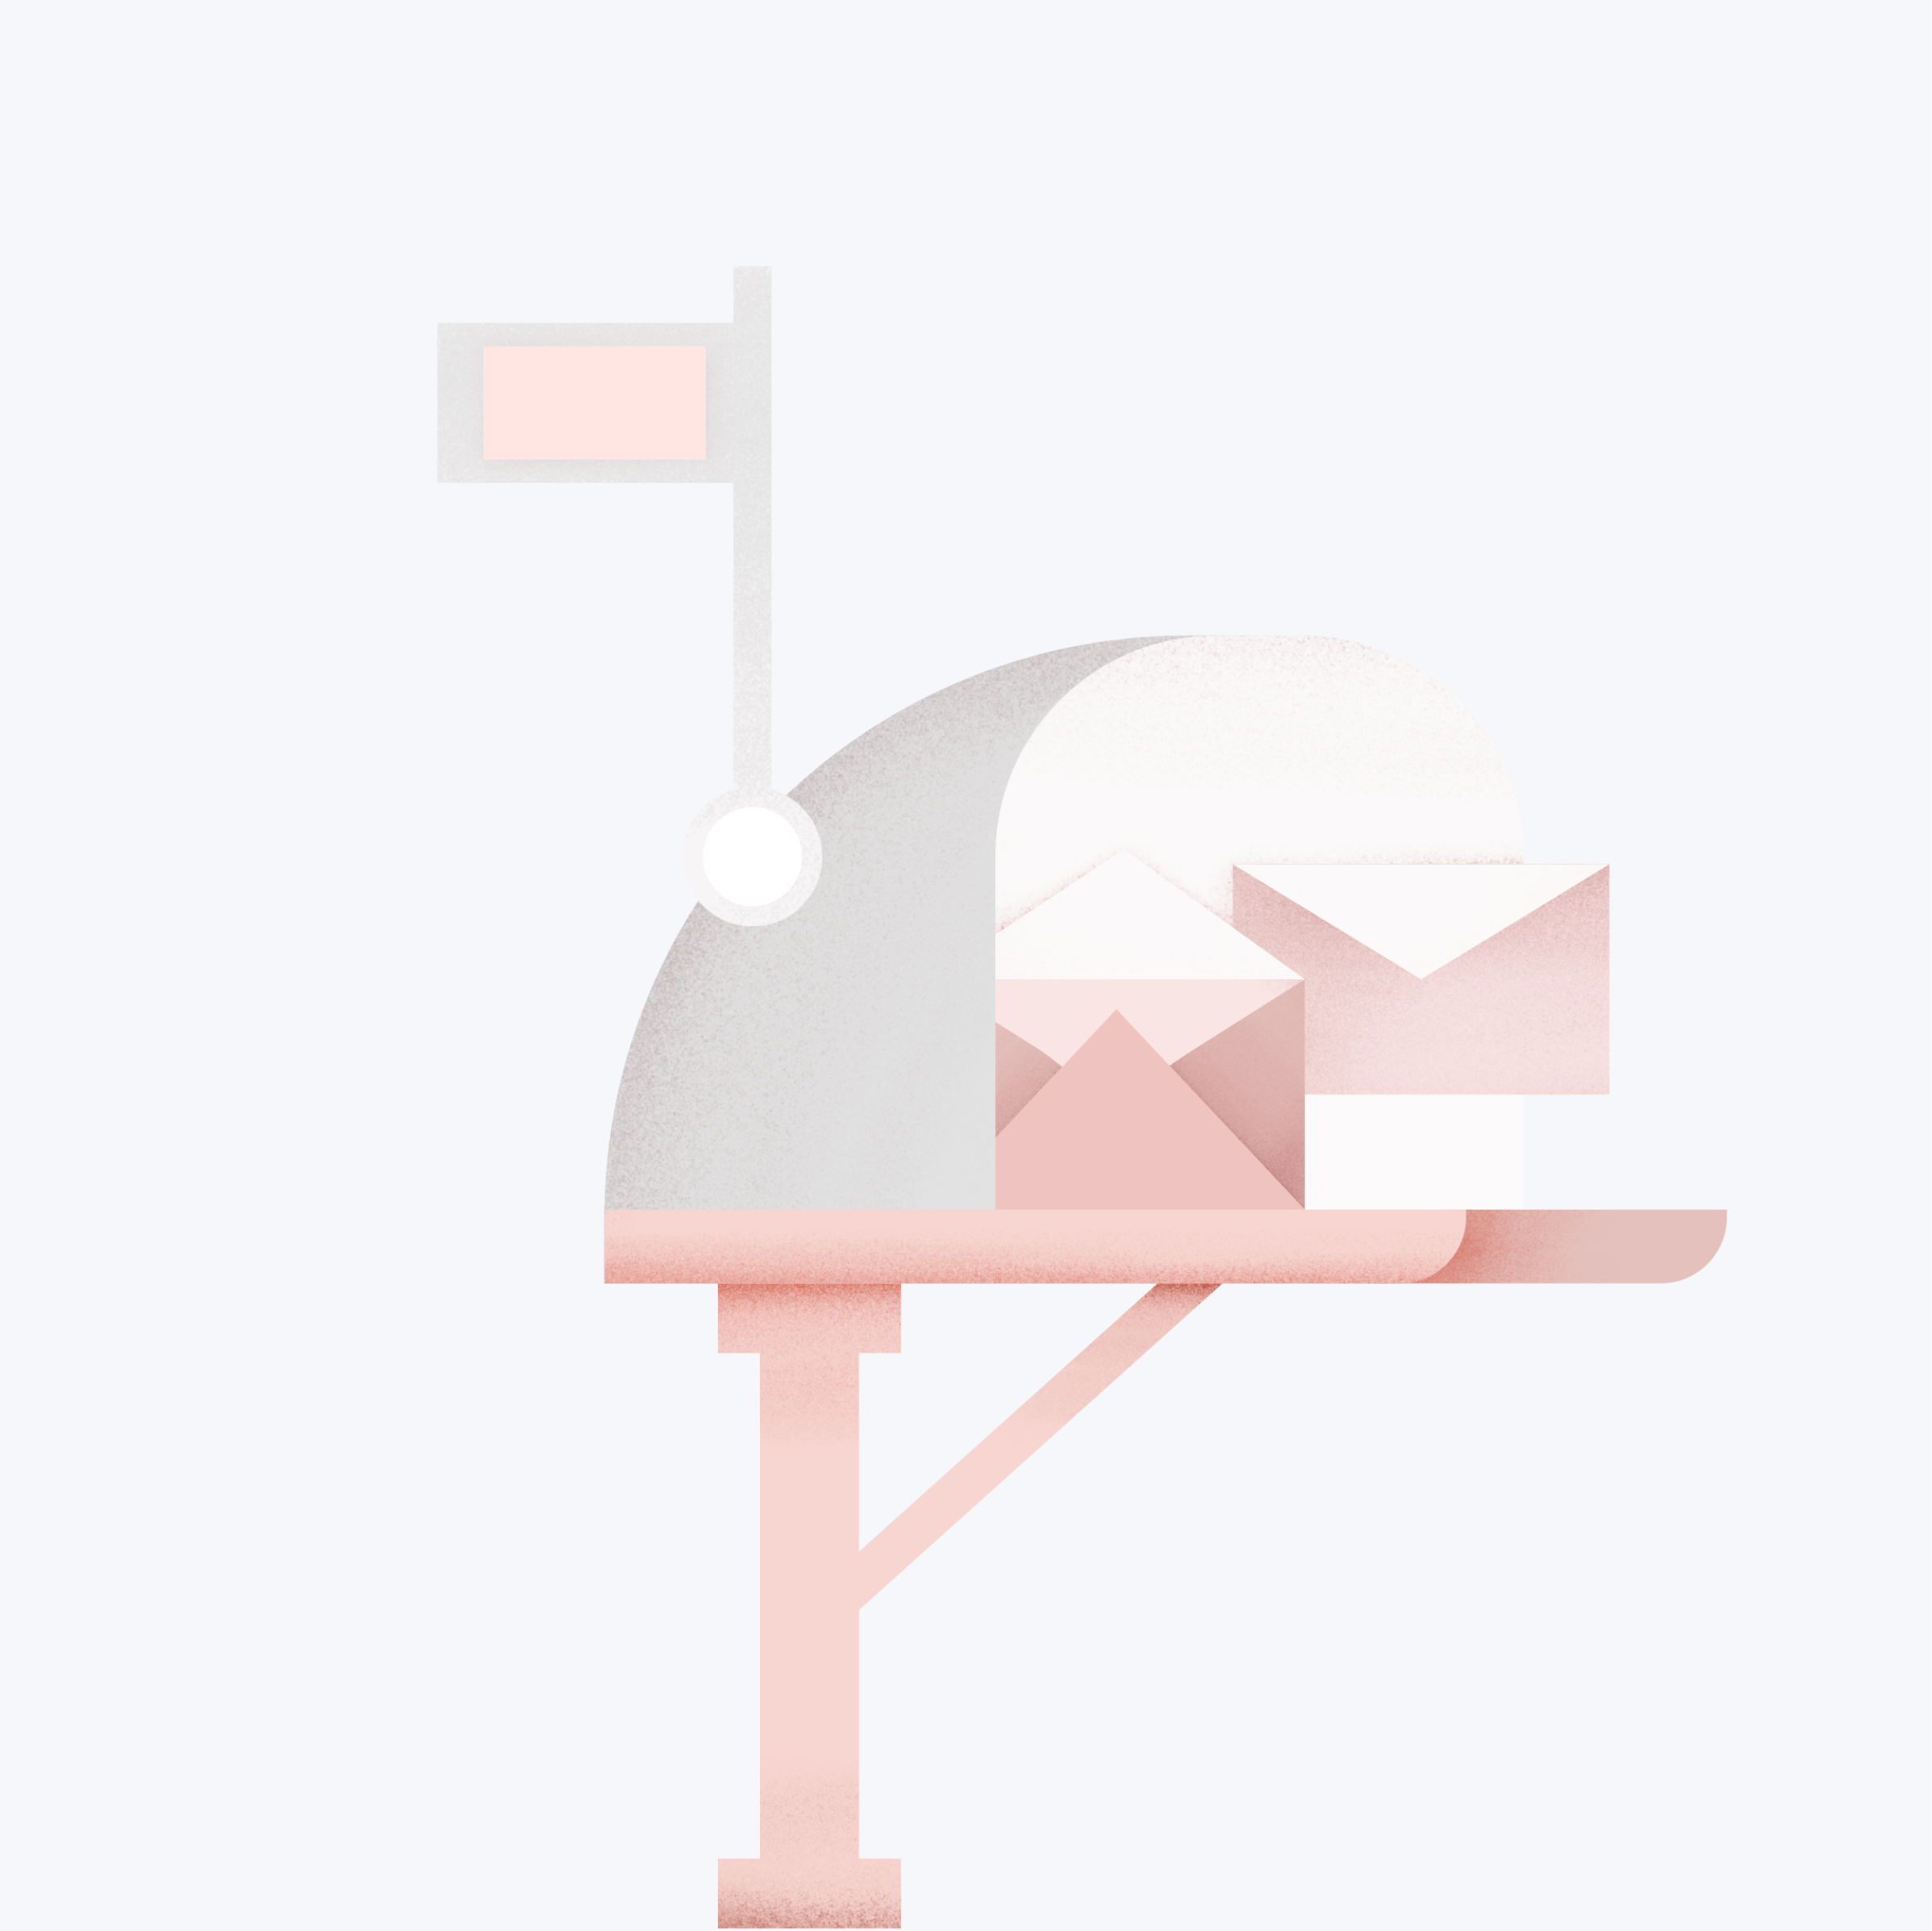 mail illustration